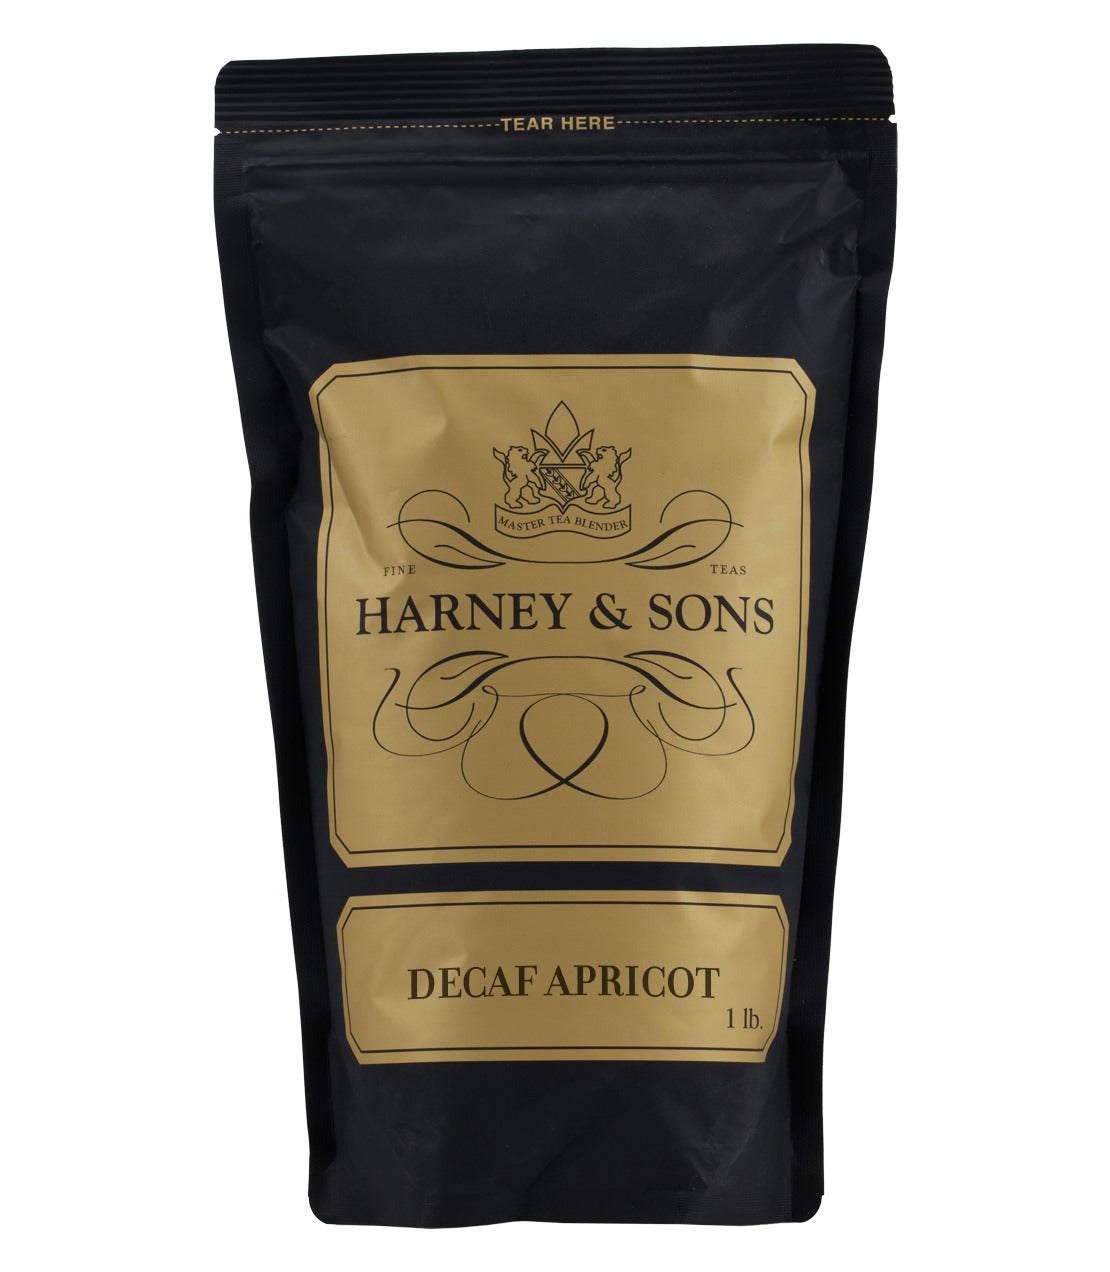 Decaf Apricot - Loose 1 lb. Bag - Harney & Sons Fine Teas